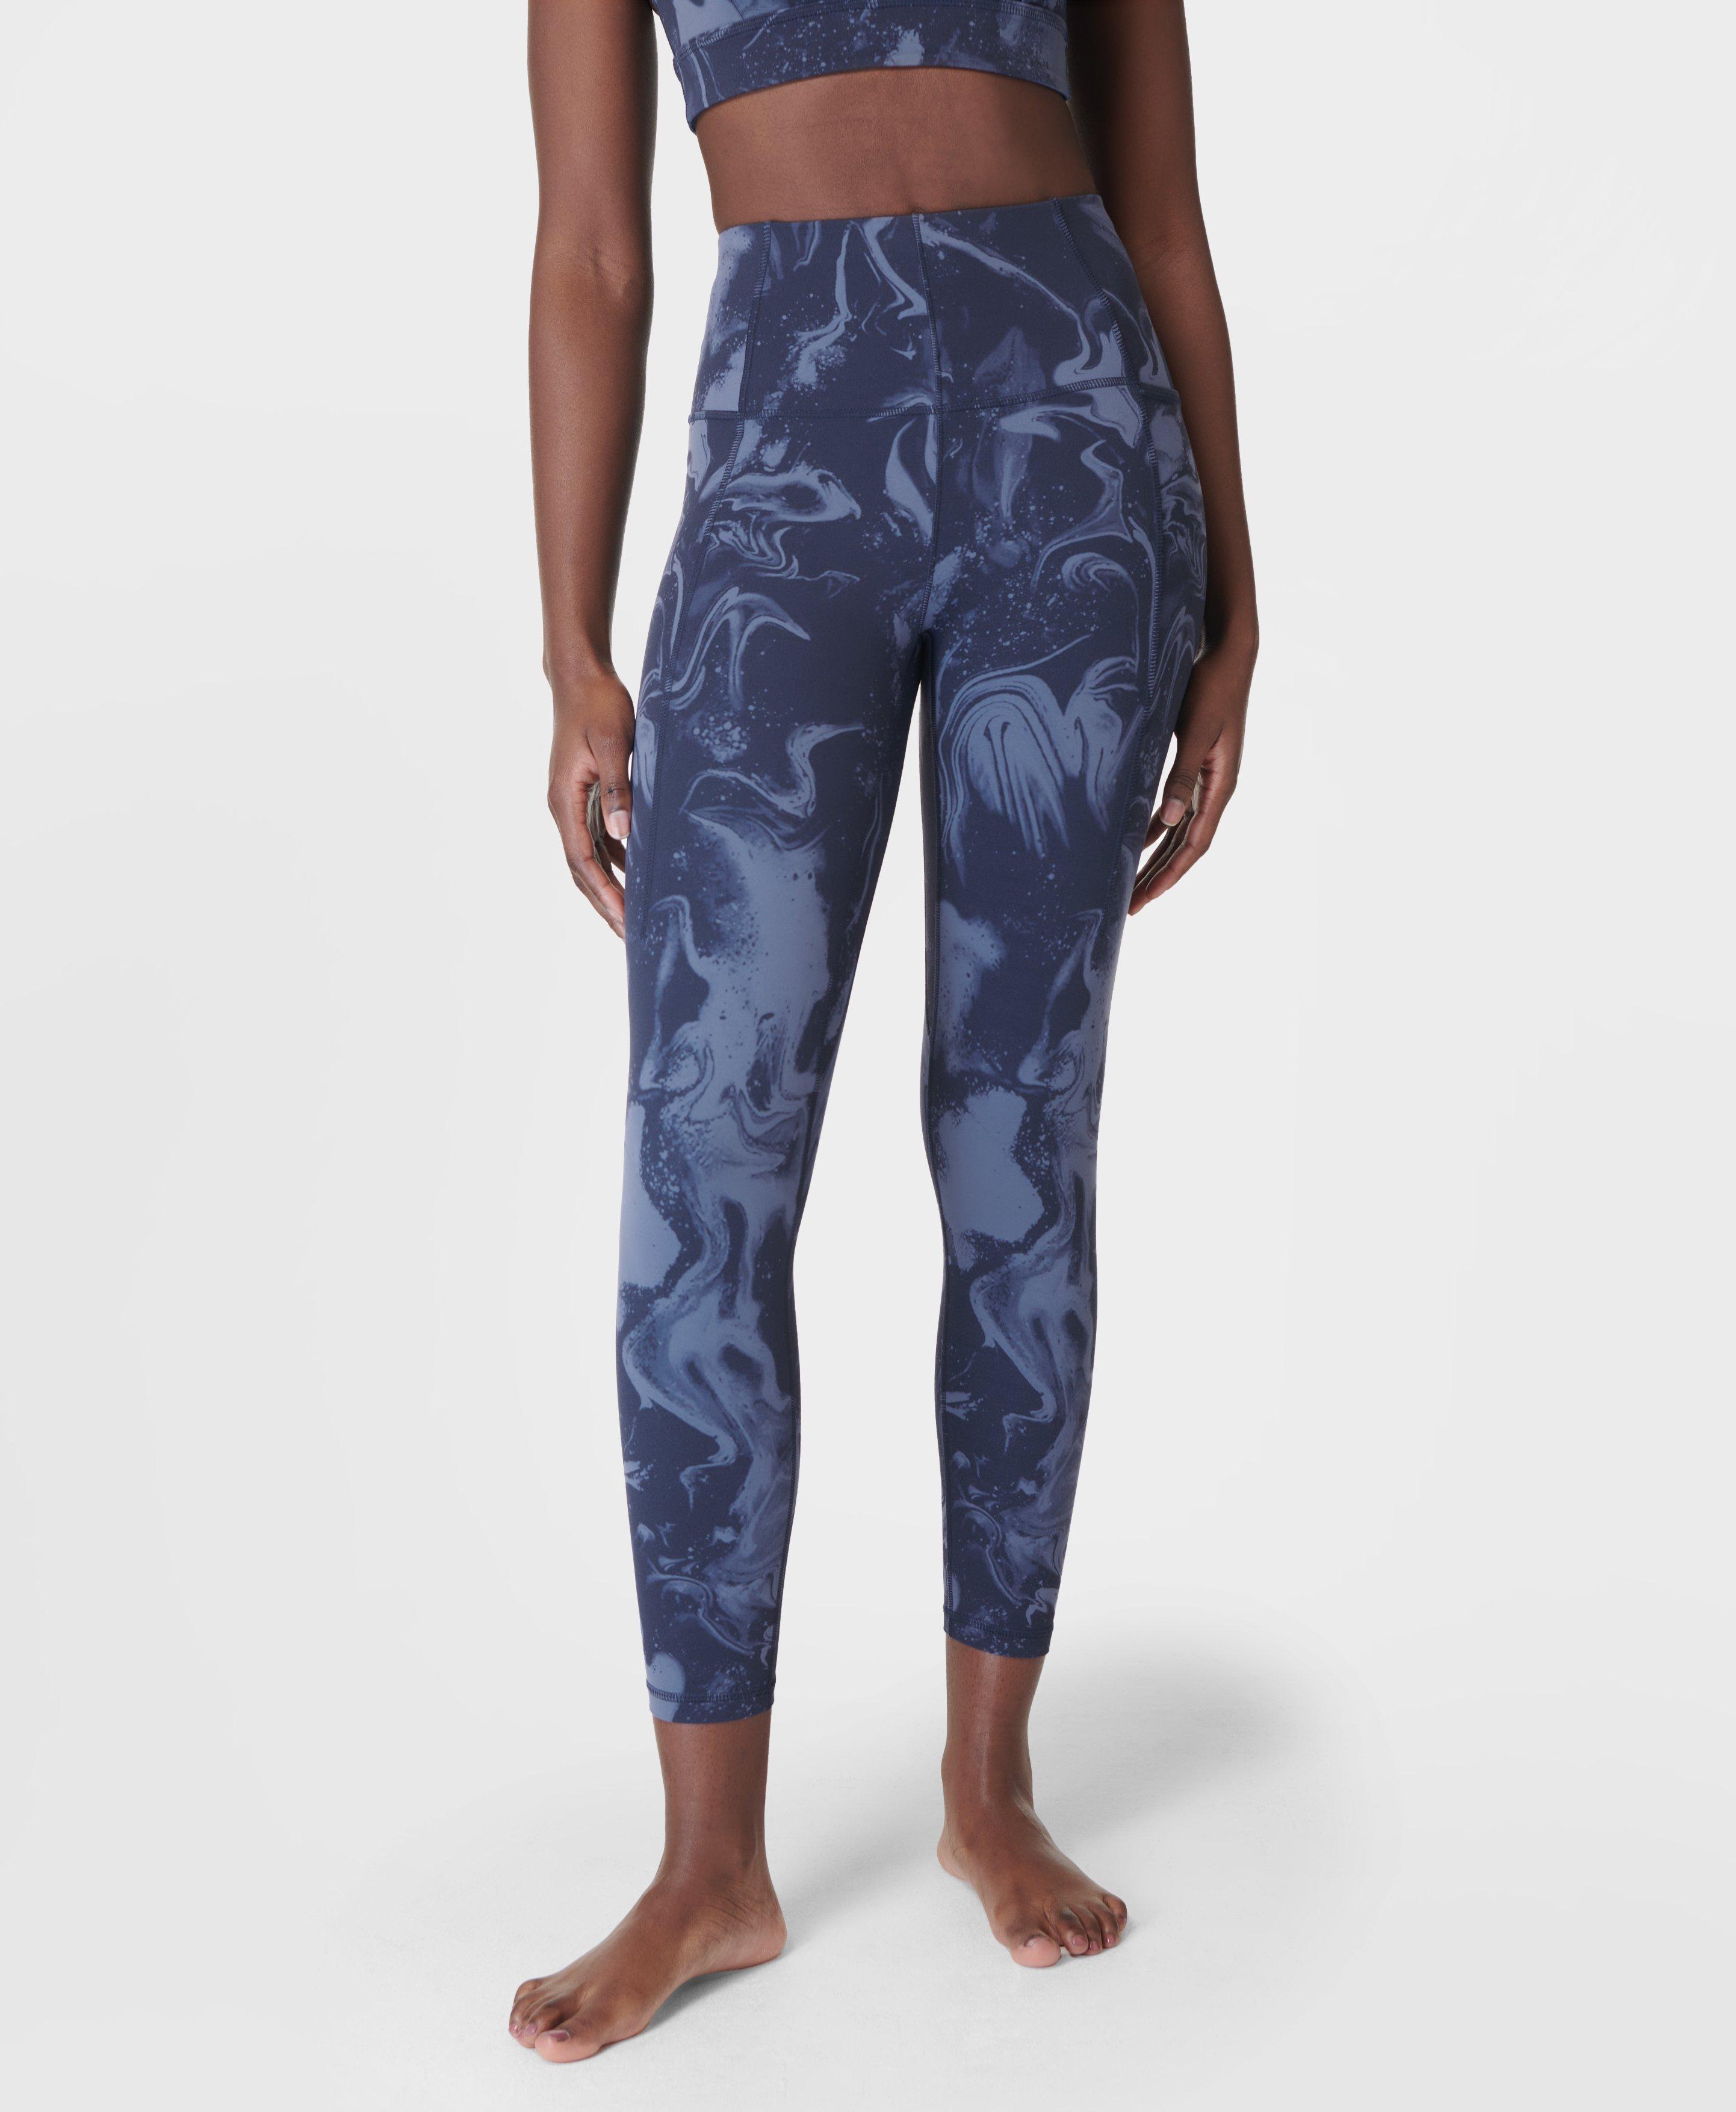 Super Soft 7/8 Yoga Leggings - Blue Marble Speckle Print